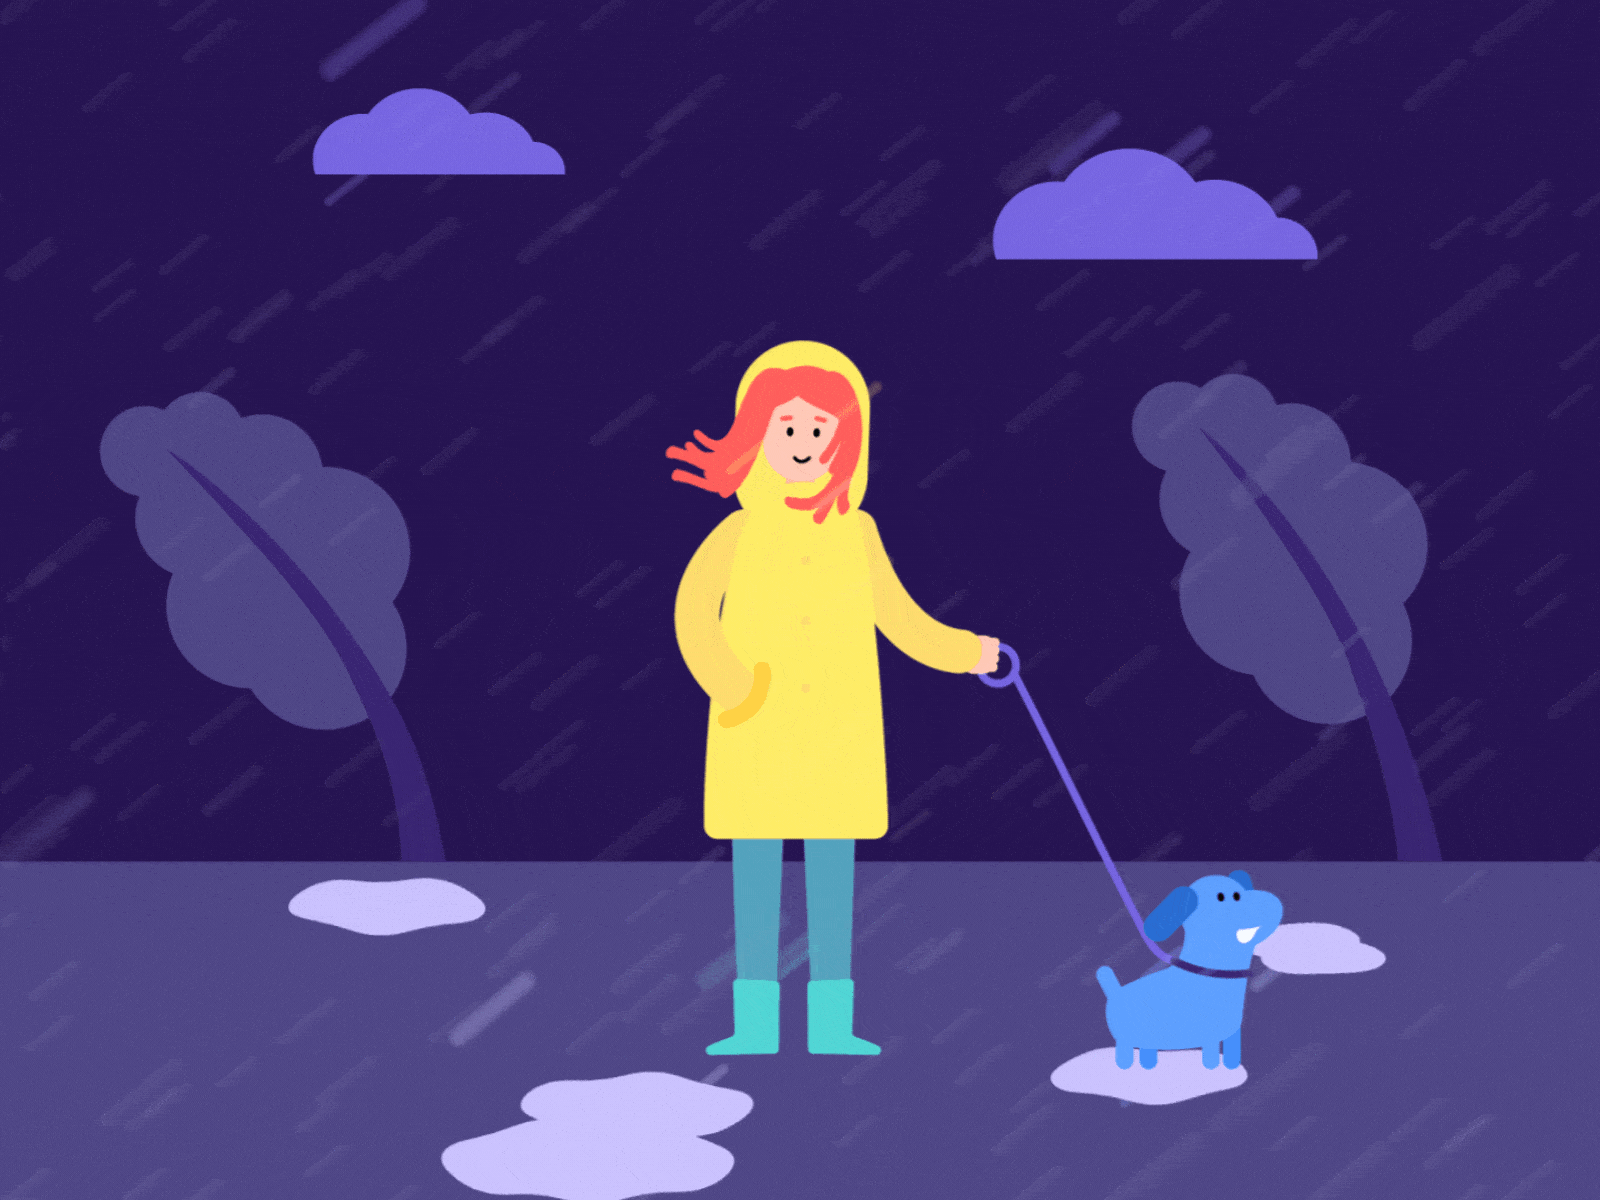 Rainy walk with the dog